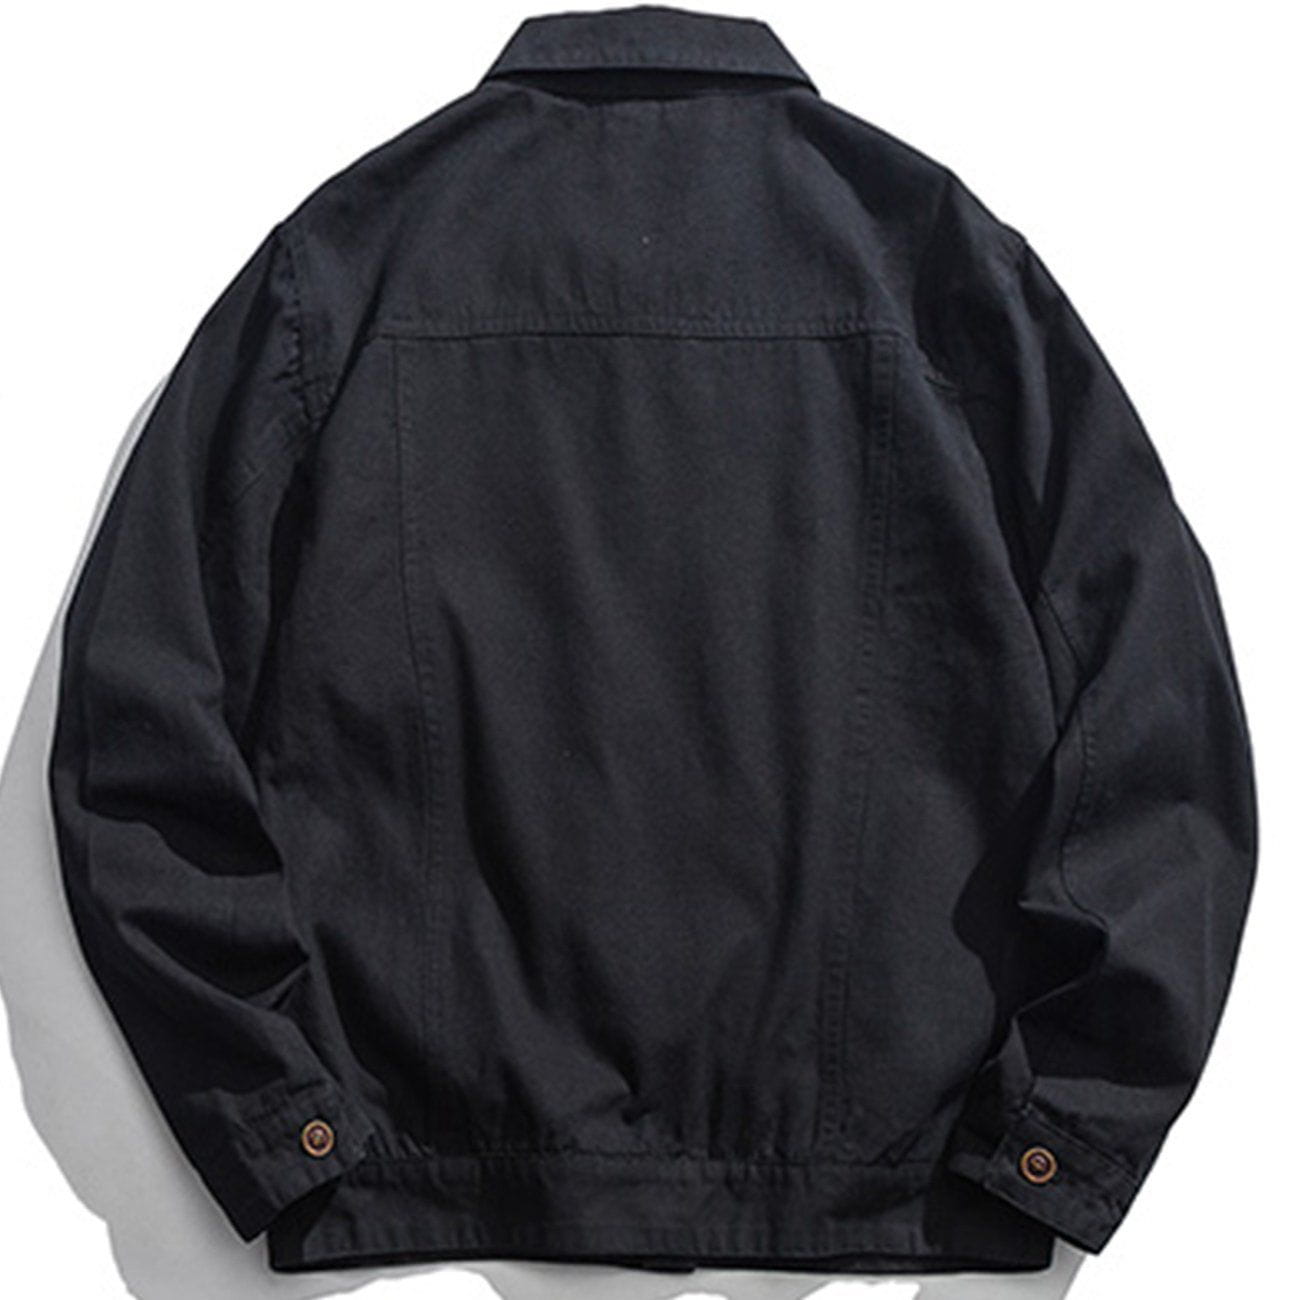 Majesda® - Plain Washed Cargo Jacket outfit ideas, streetwear fashion - majesda.com